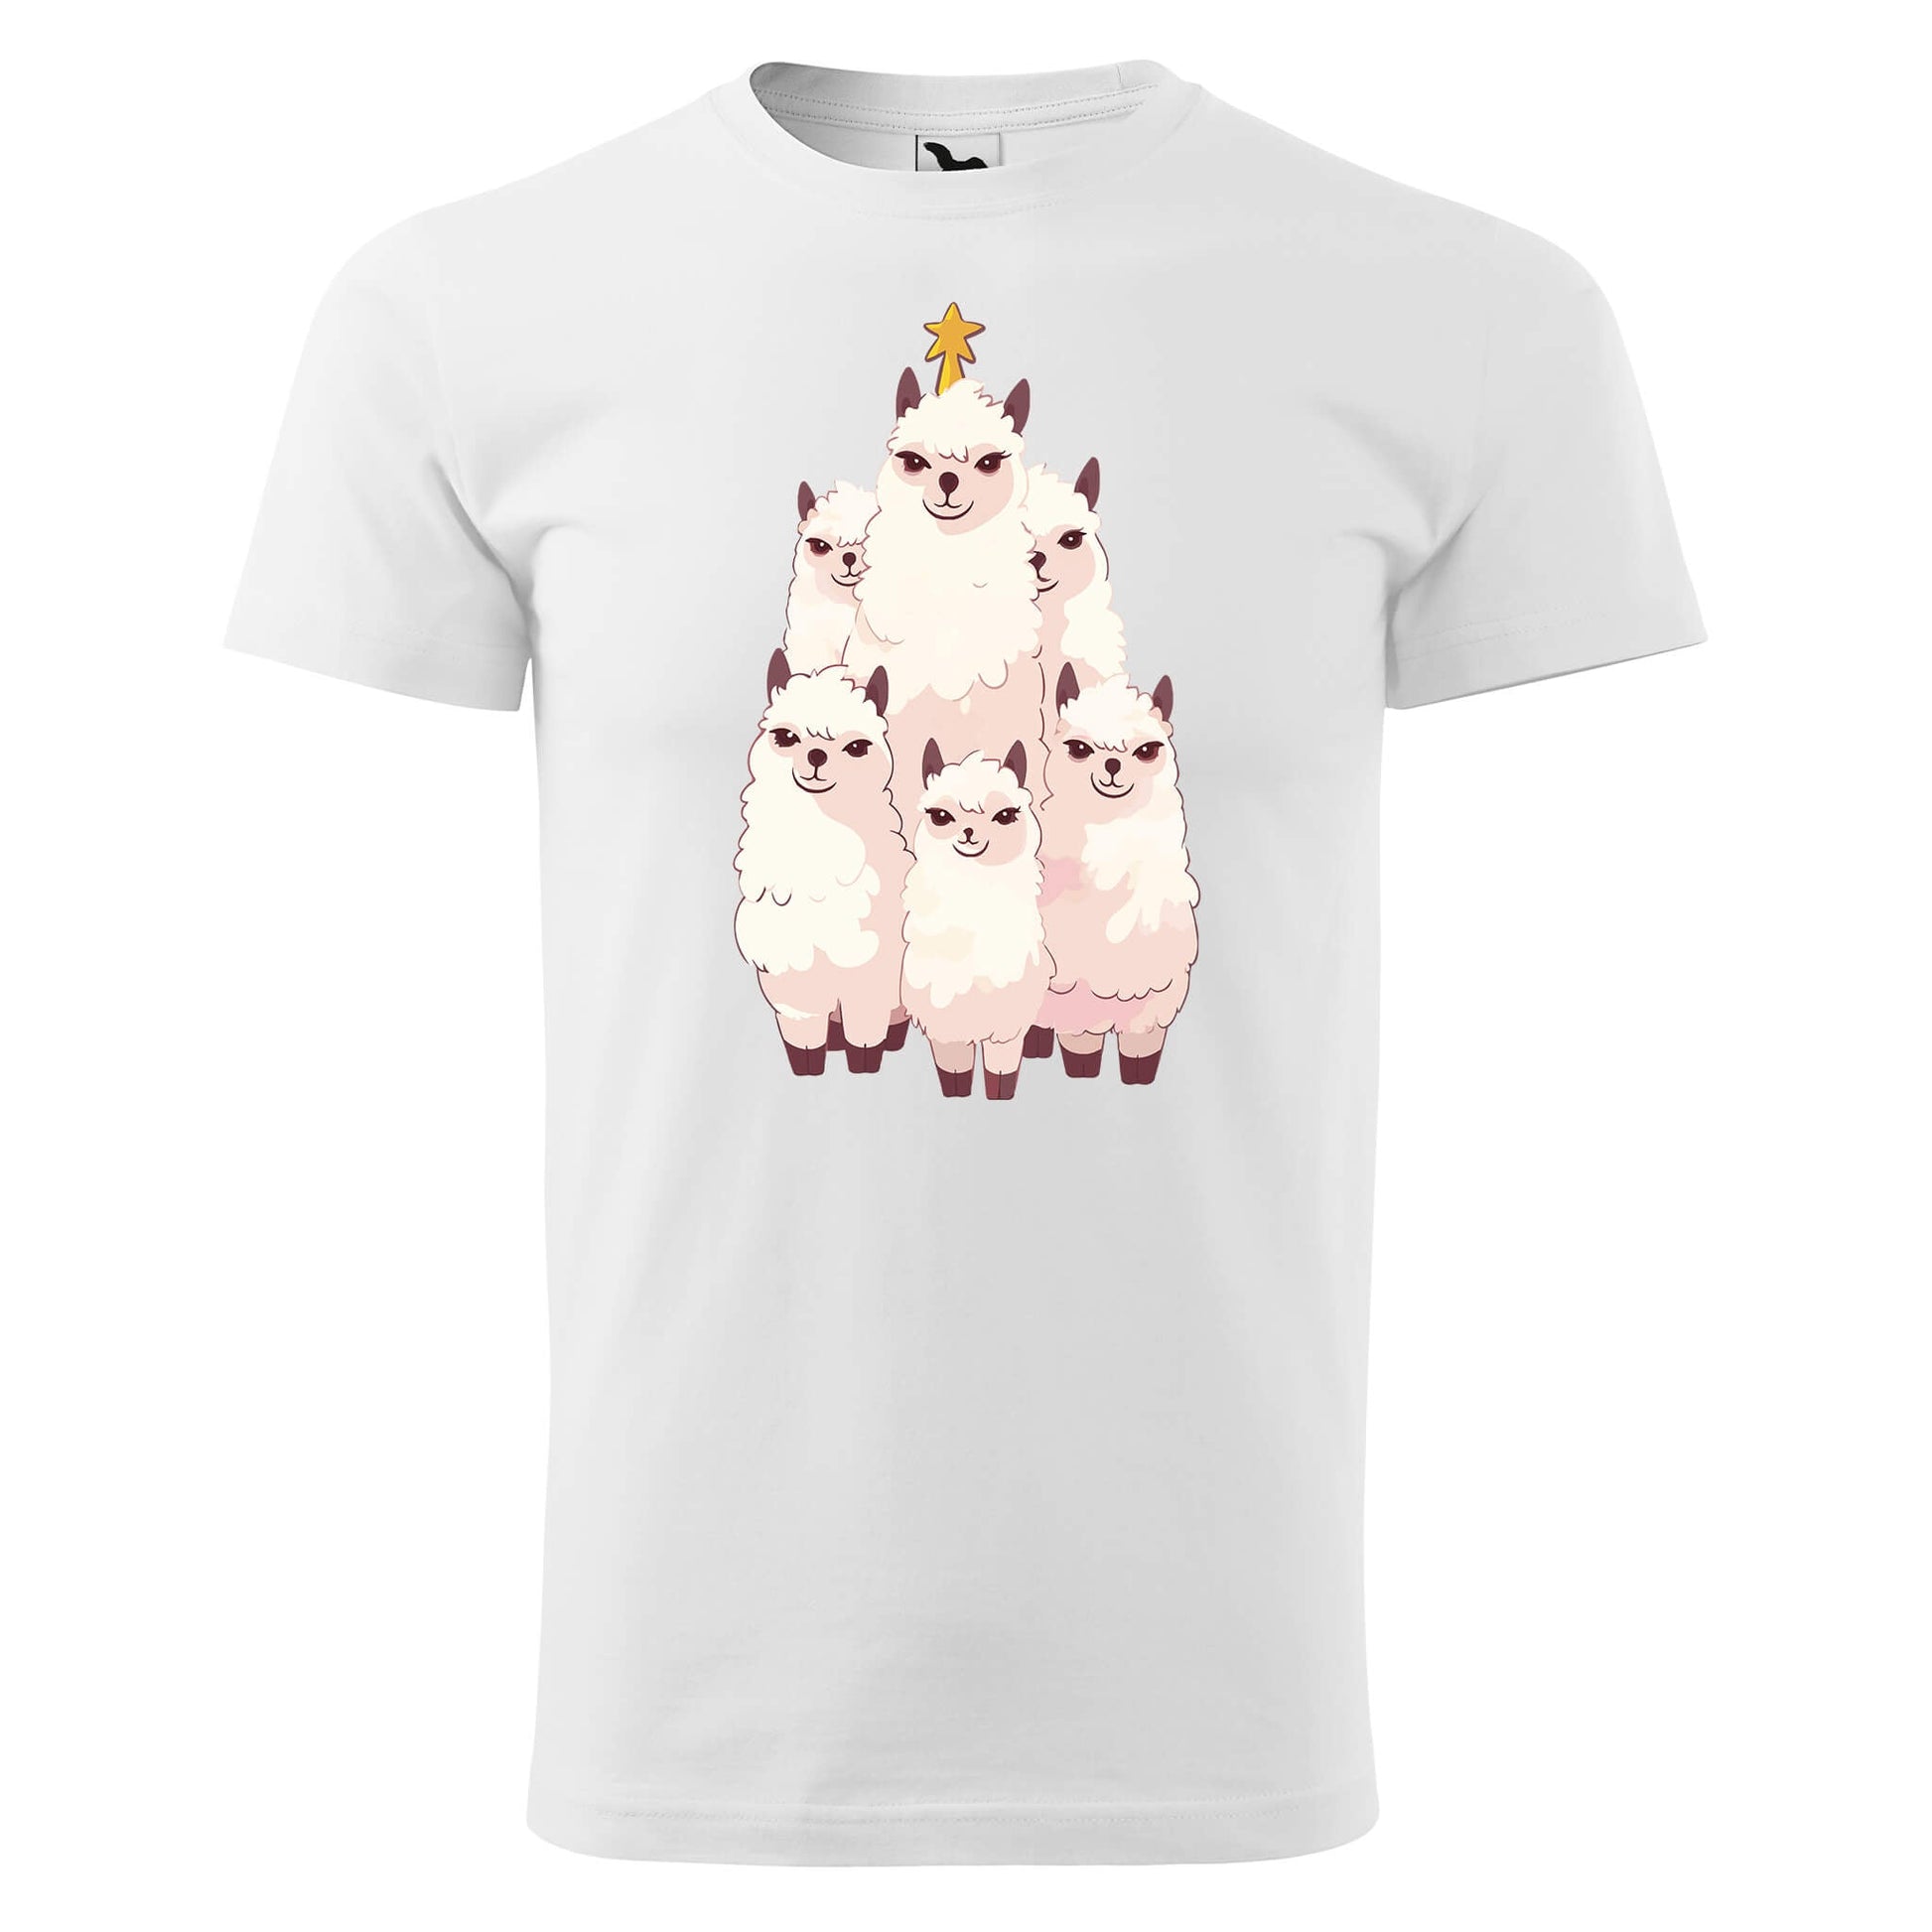 Llama christmas tree t-shirt - rvdesignprint